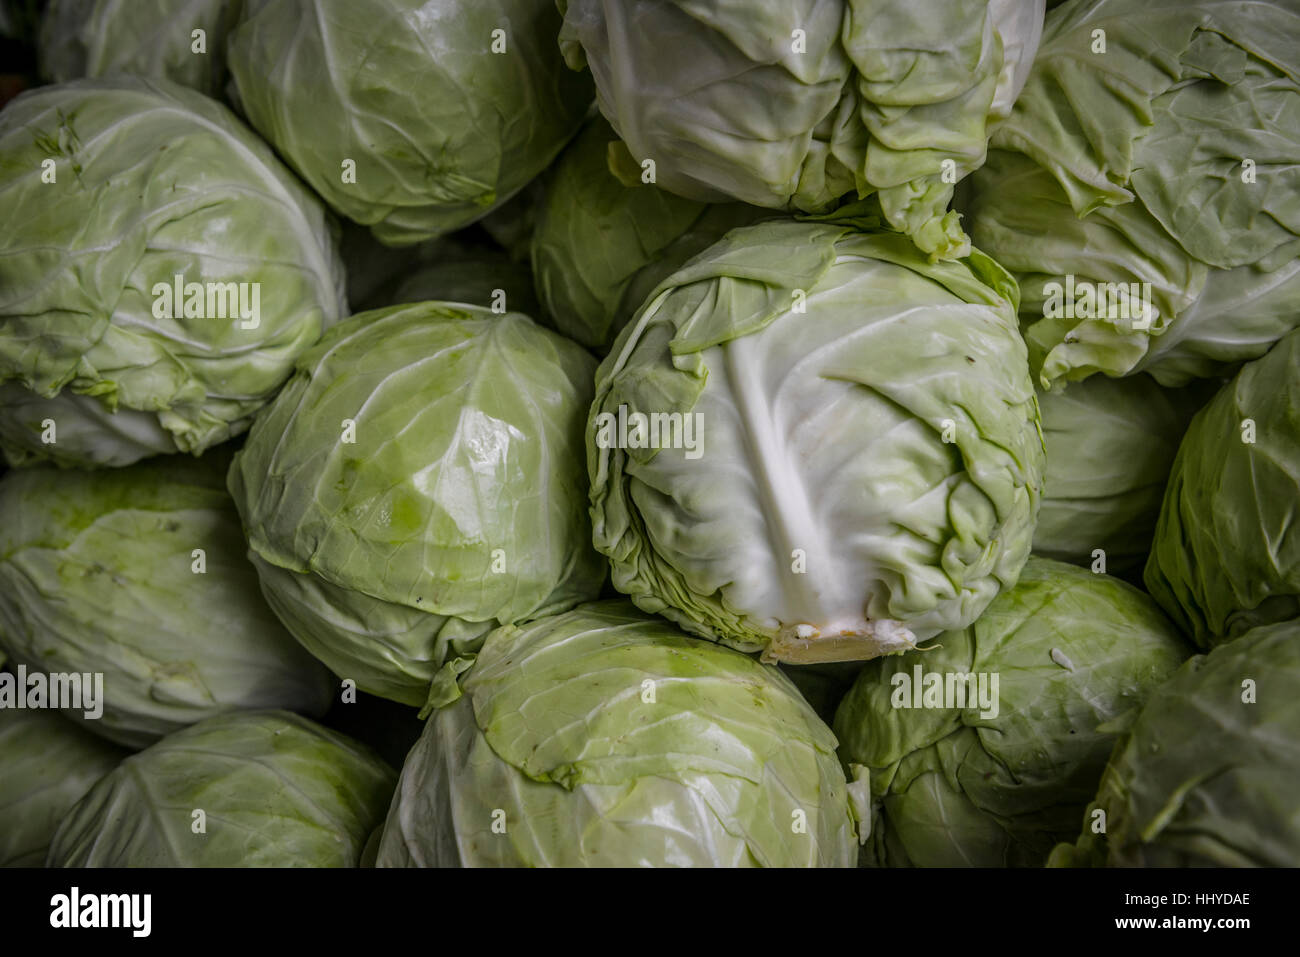 many heads of green lettuce Stock Photo